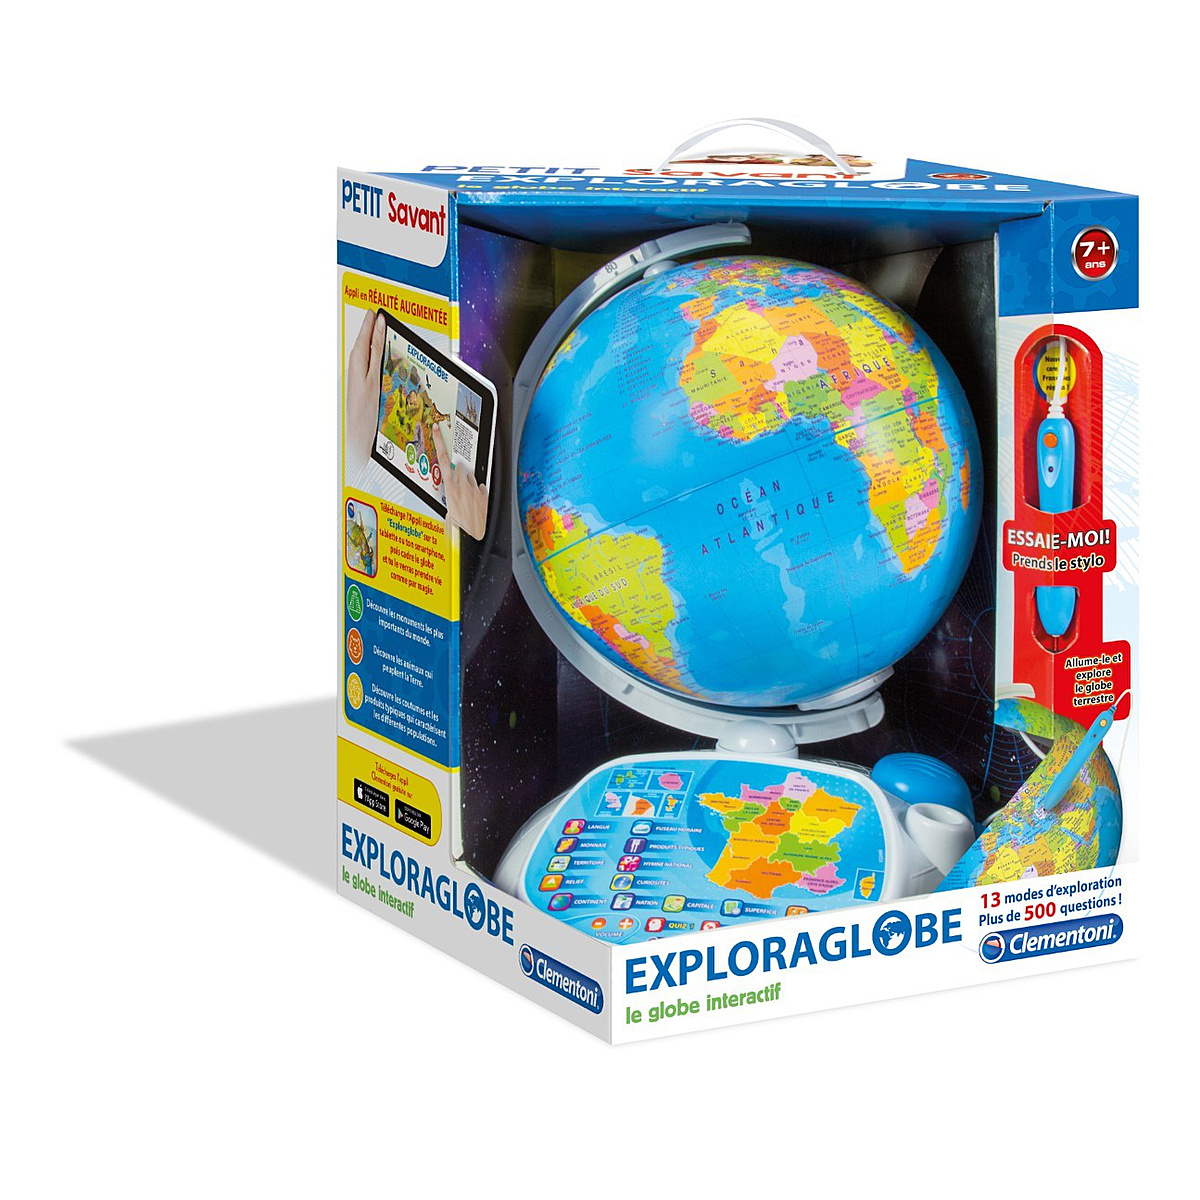 Exploraglobe - Le Globe Interactif au meilleur prix